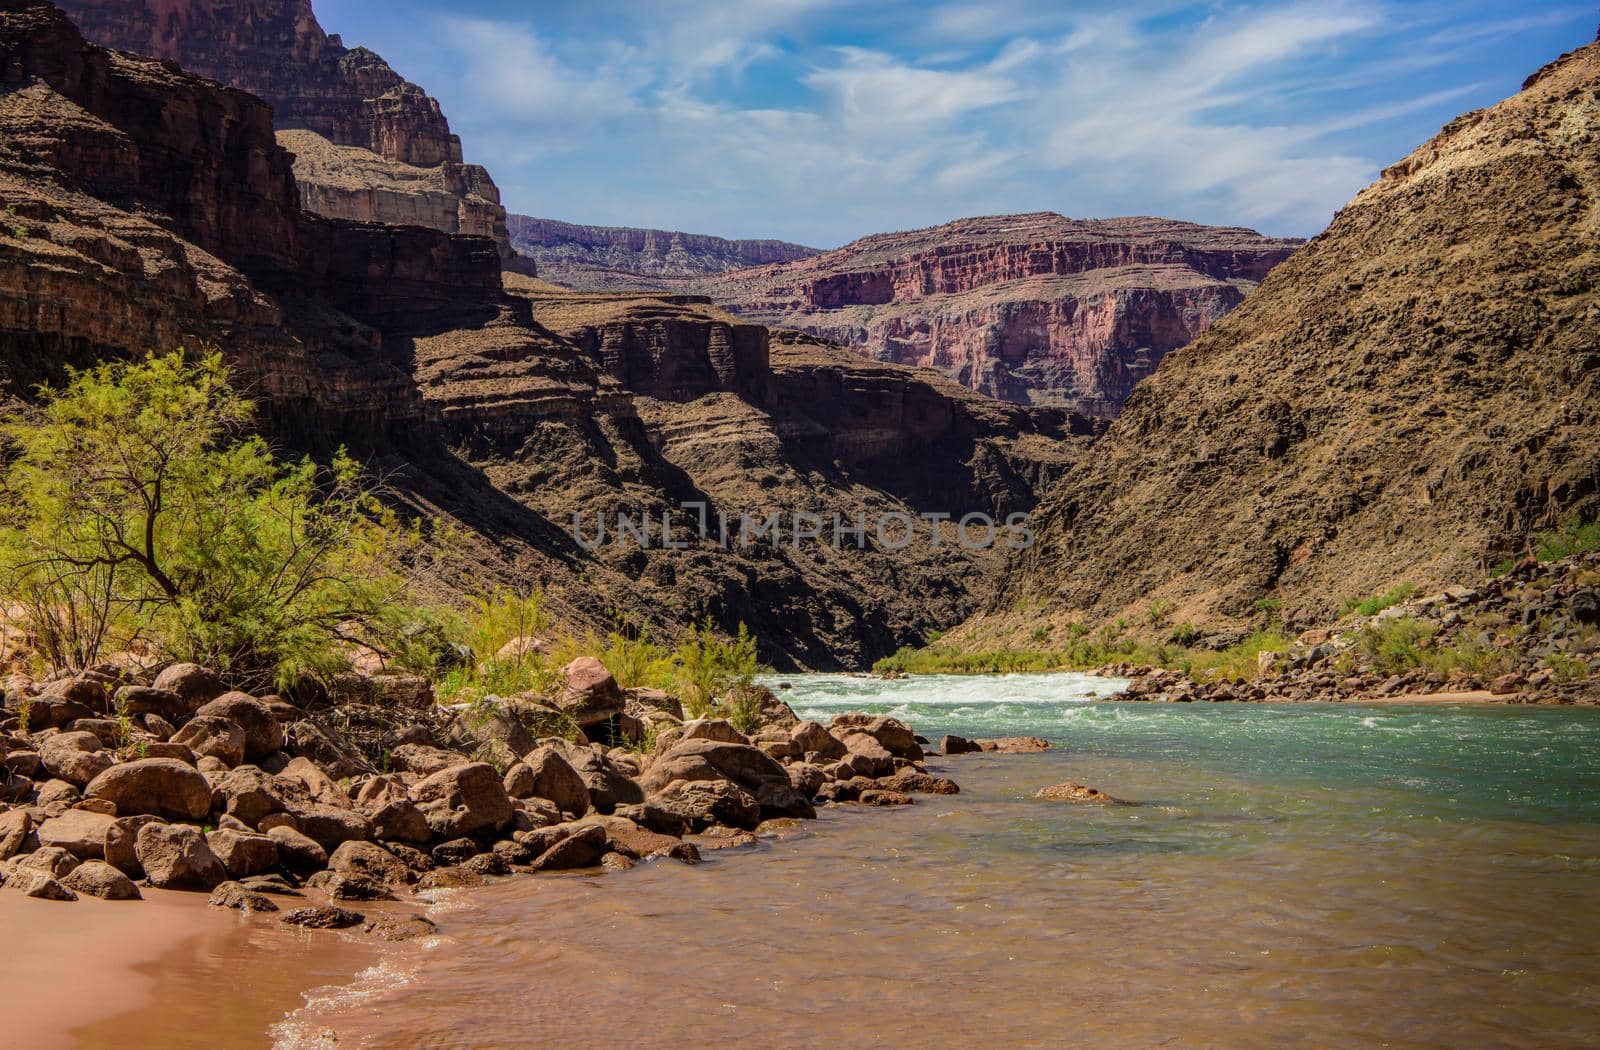 Colorado River Rapids in The Grand Canyon